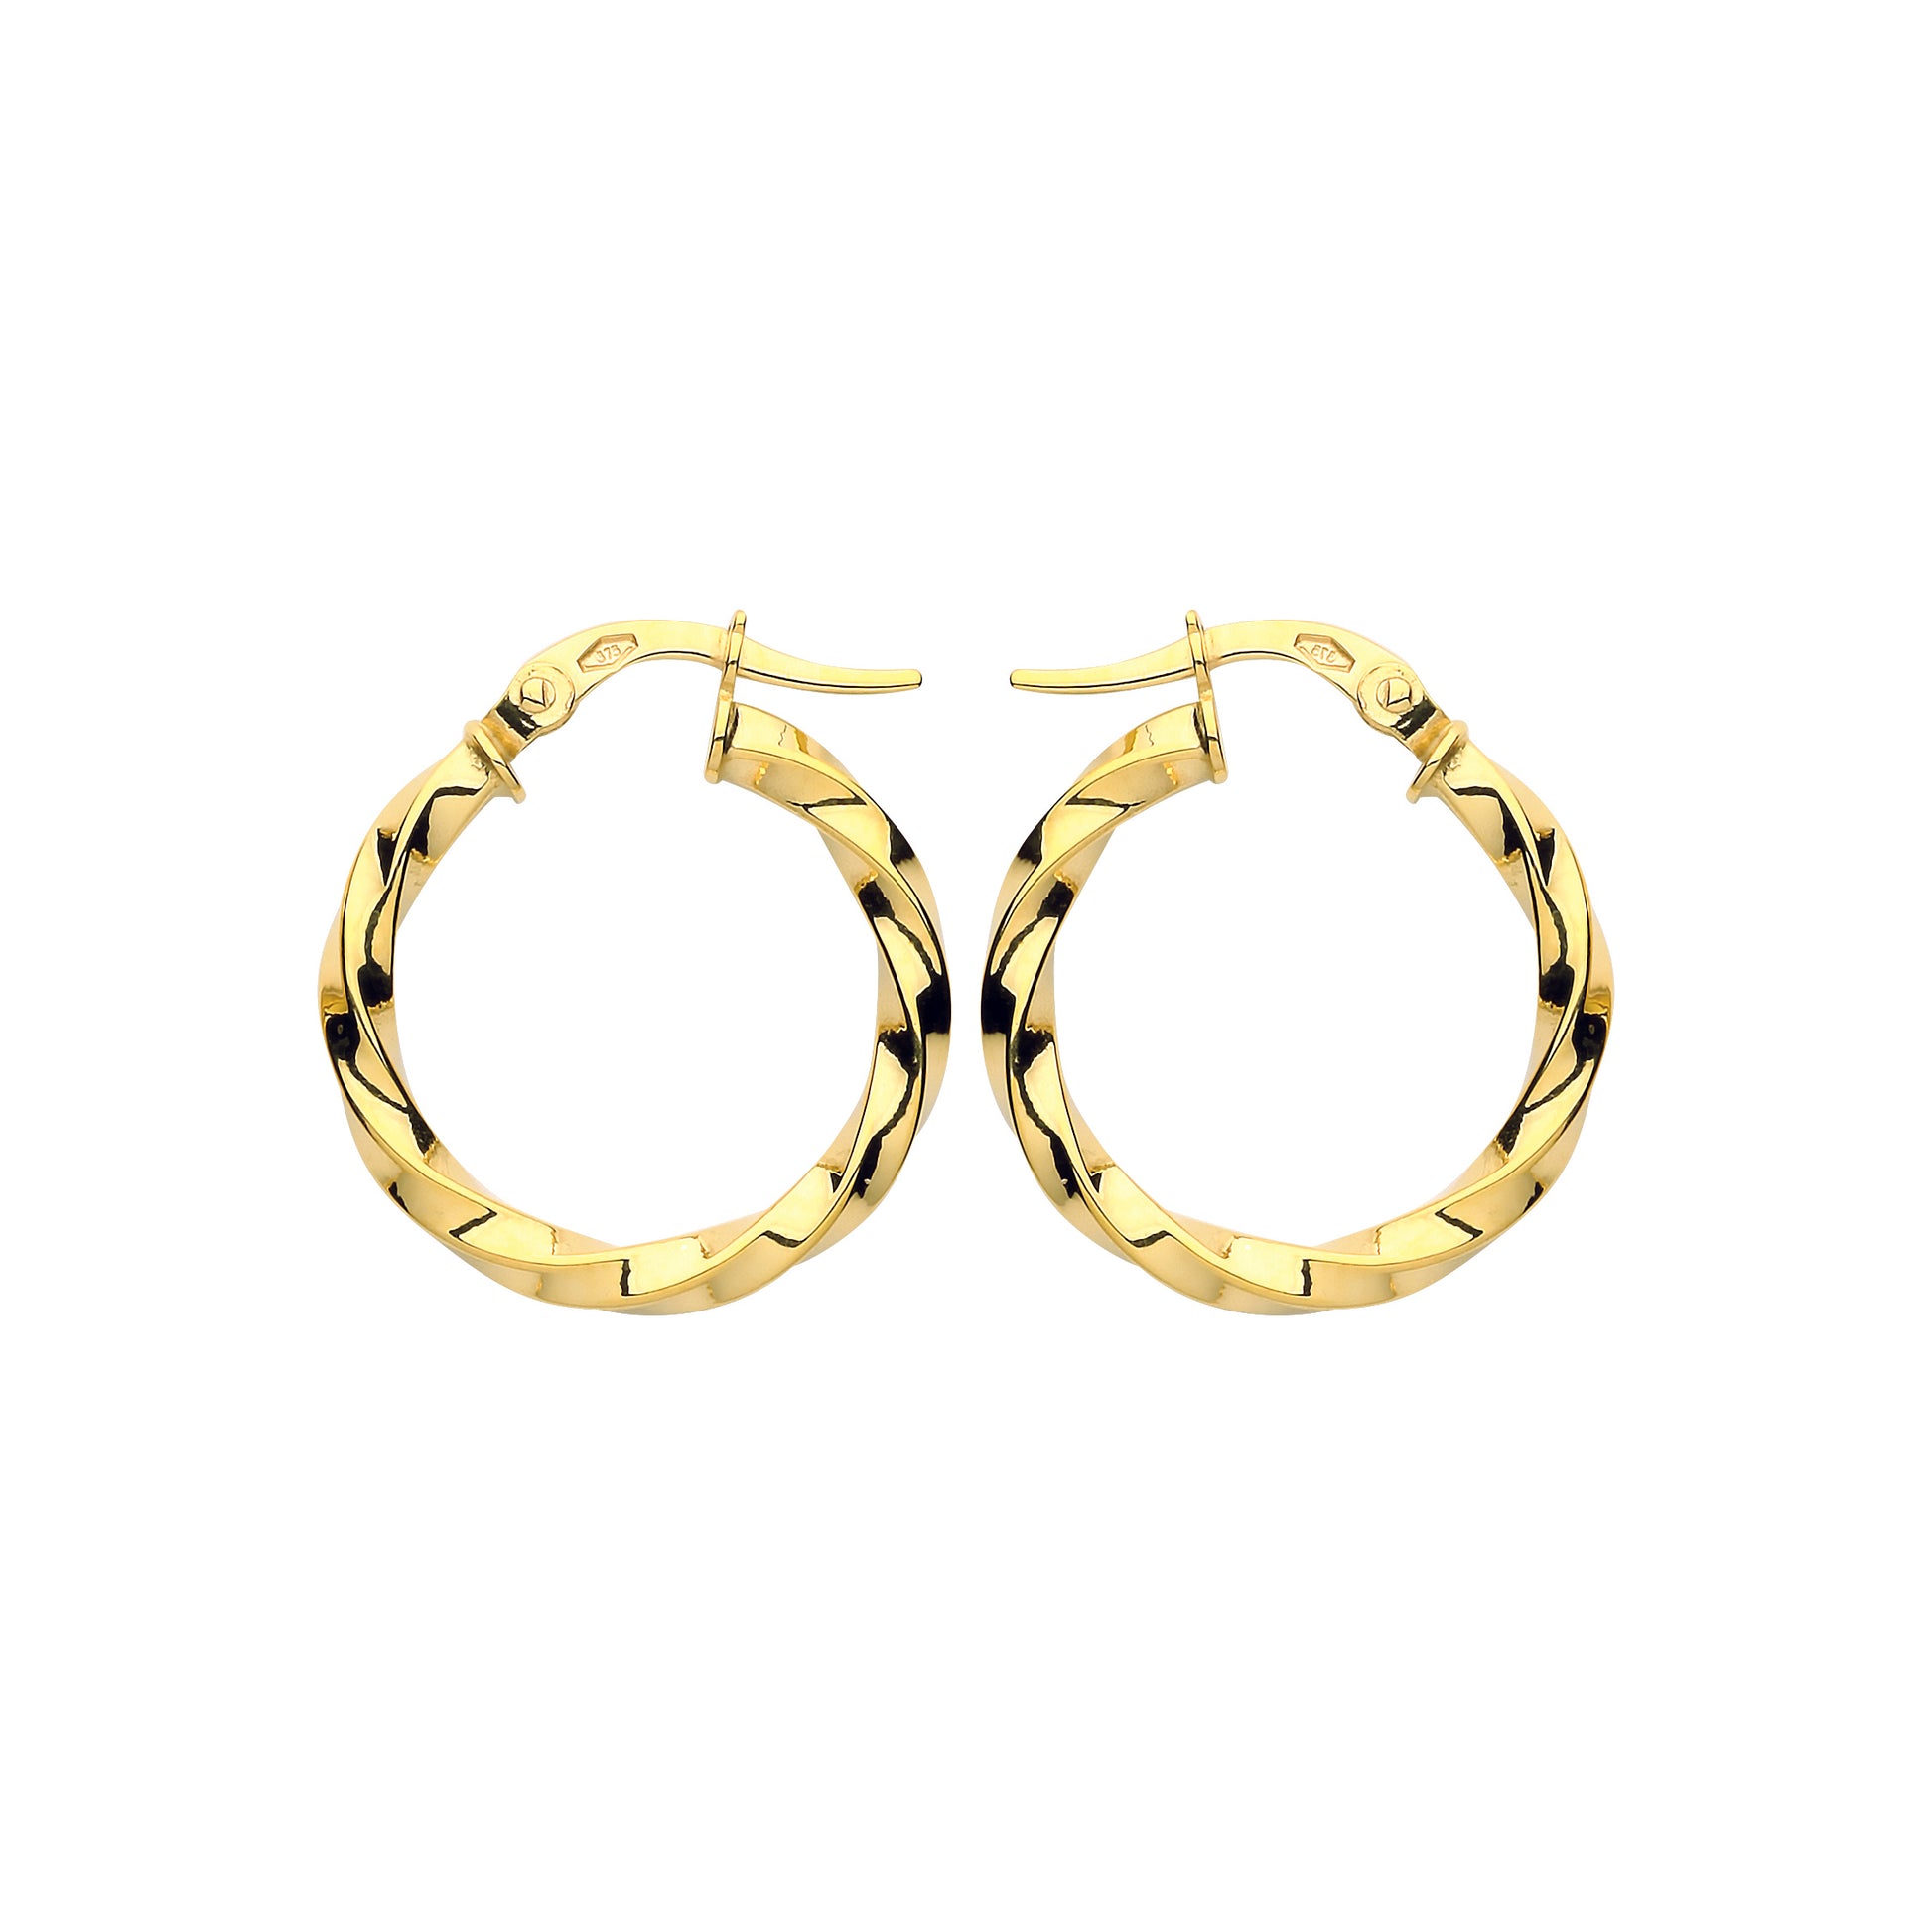 9ct Gold  Square Tube Twist Hoop Earrings 20mm 2.5mm - G9E8089